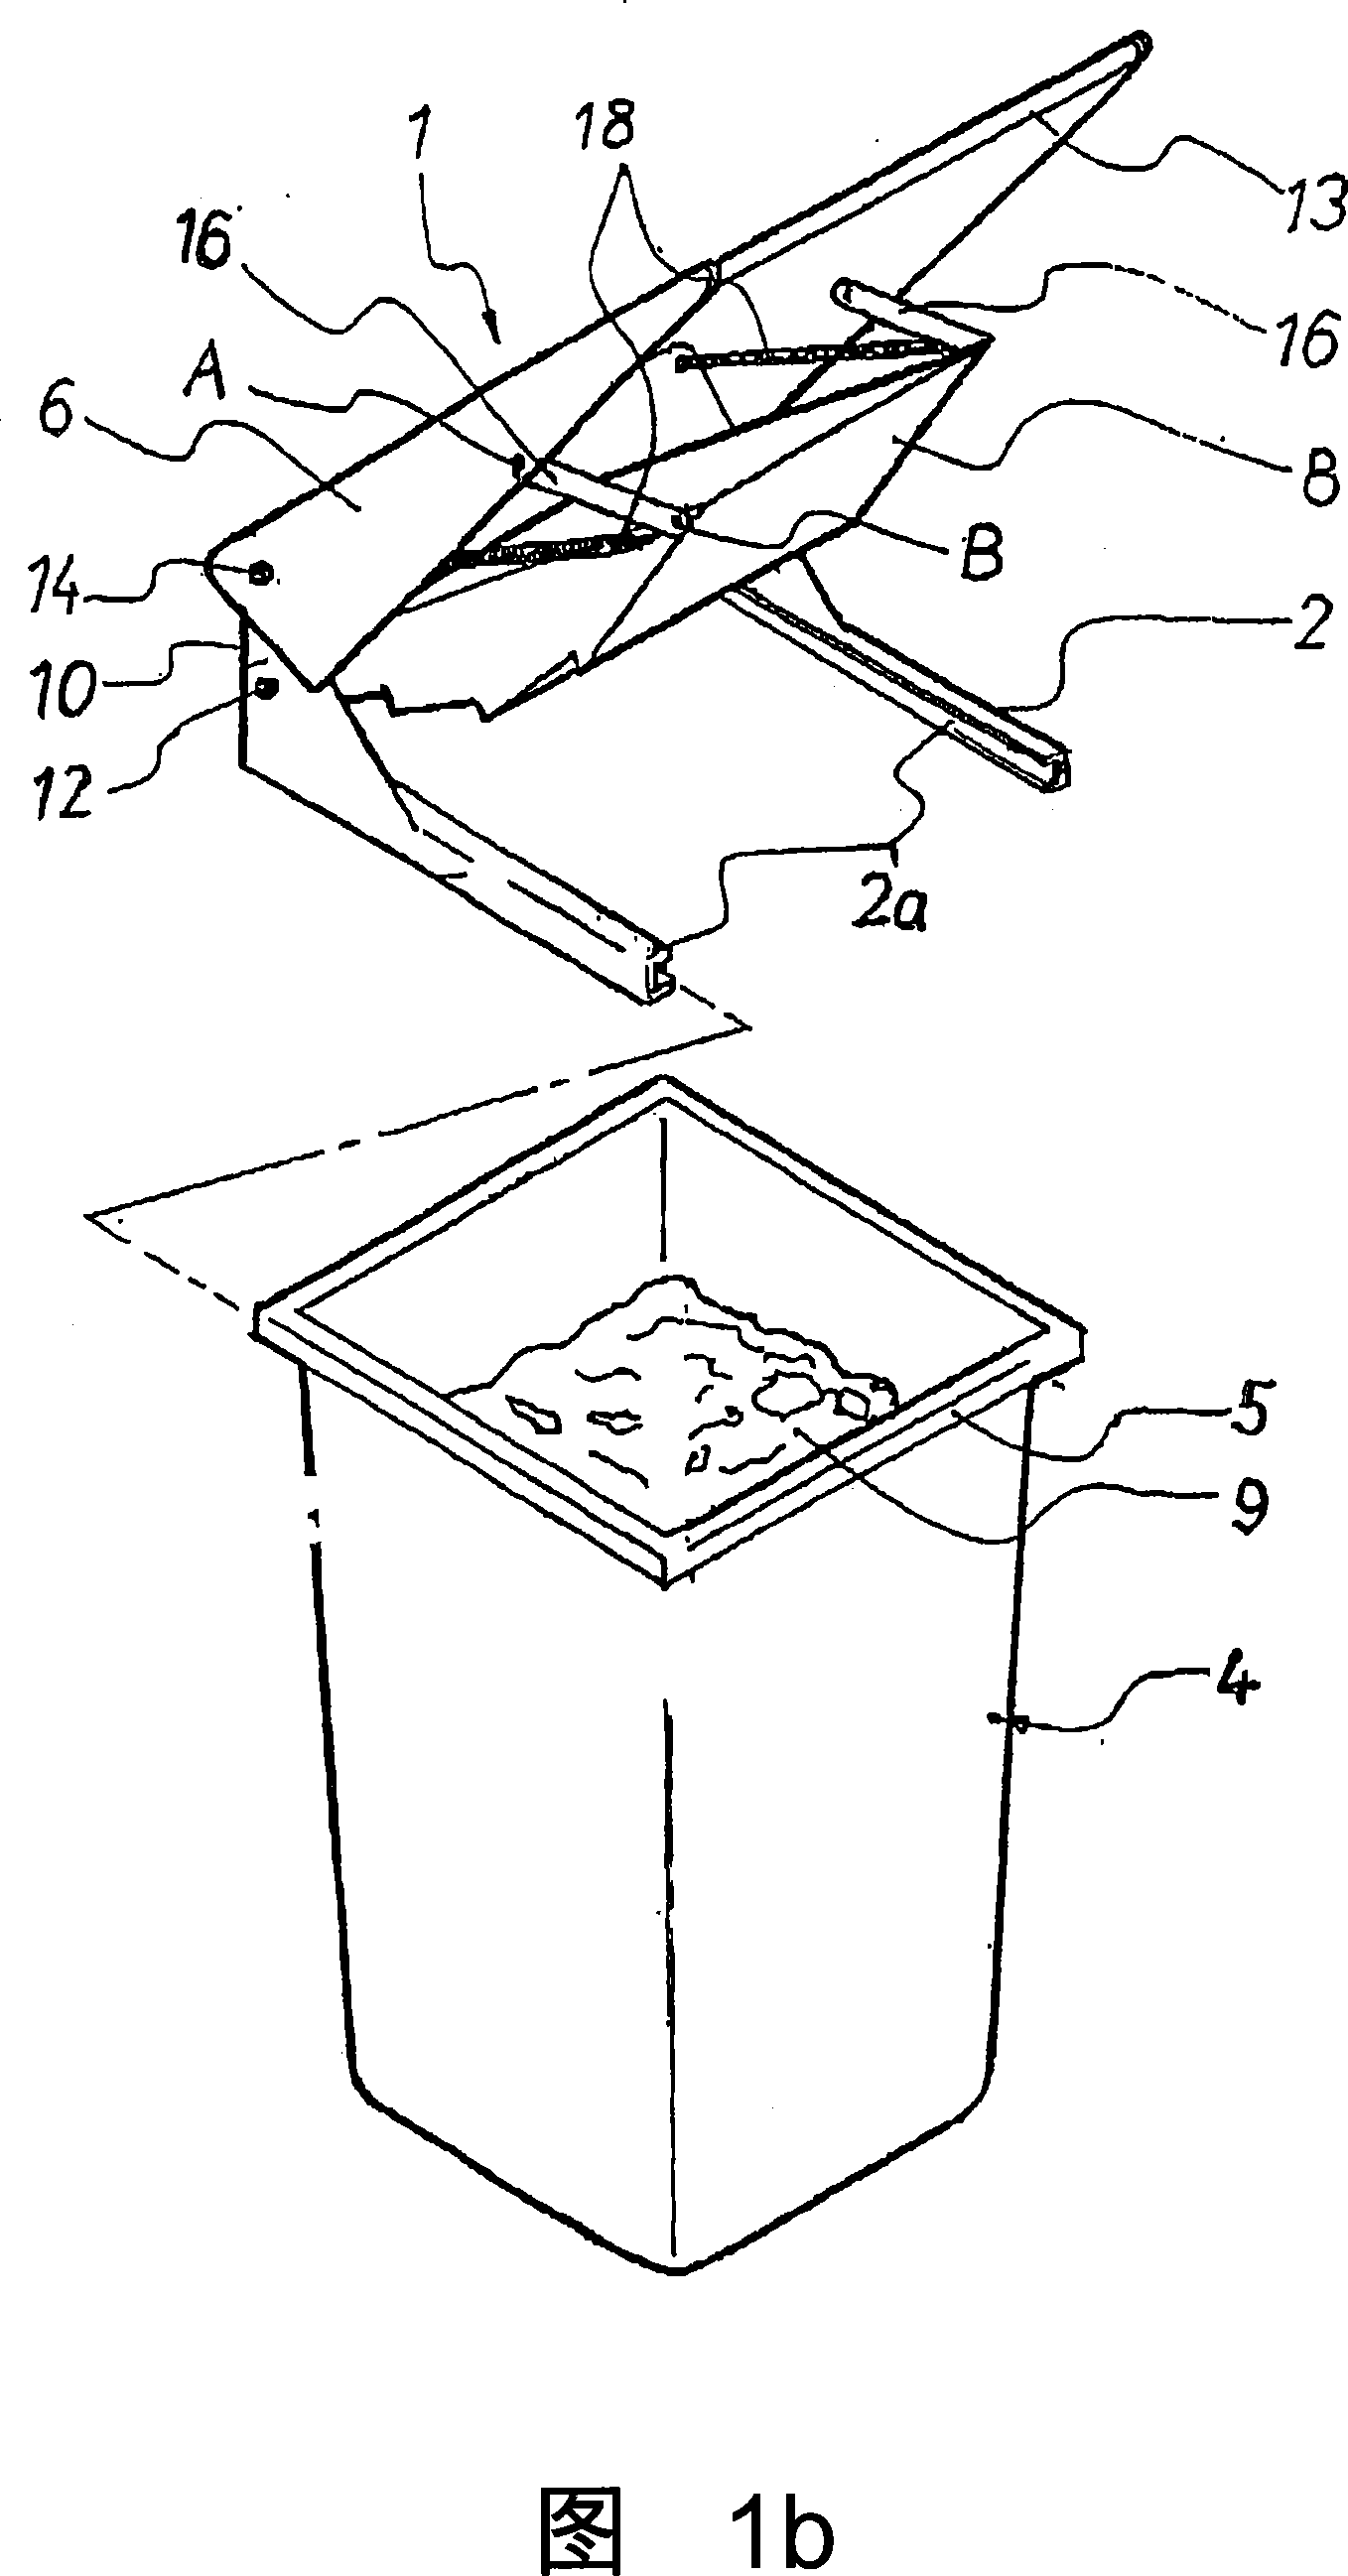 A bin compactor